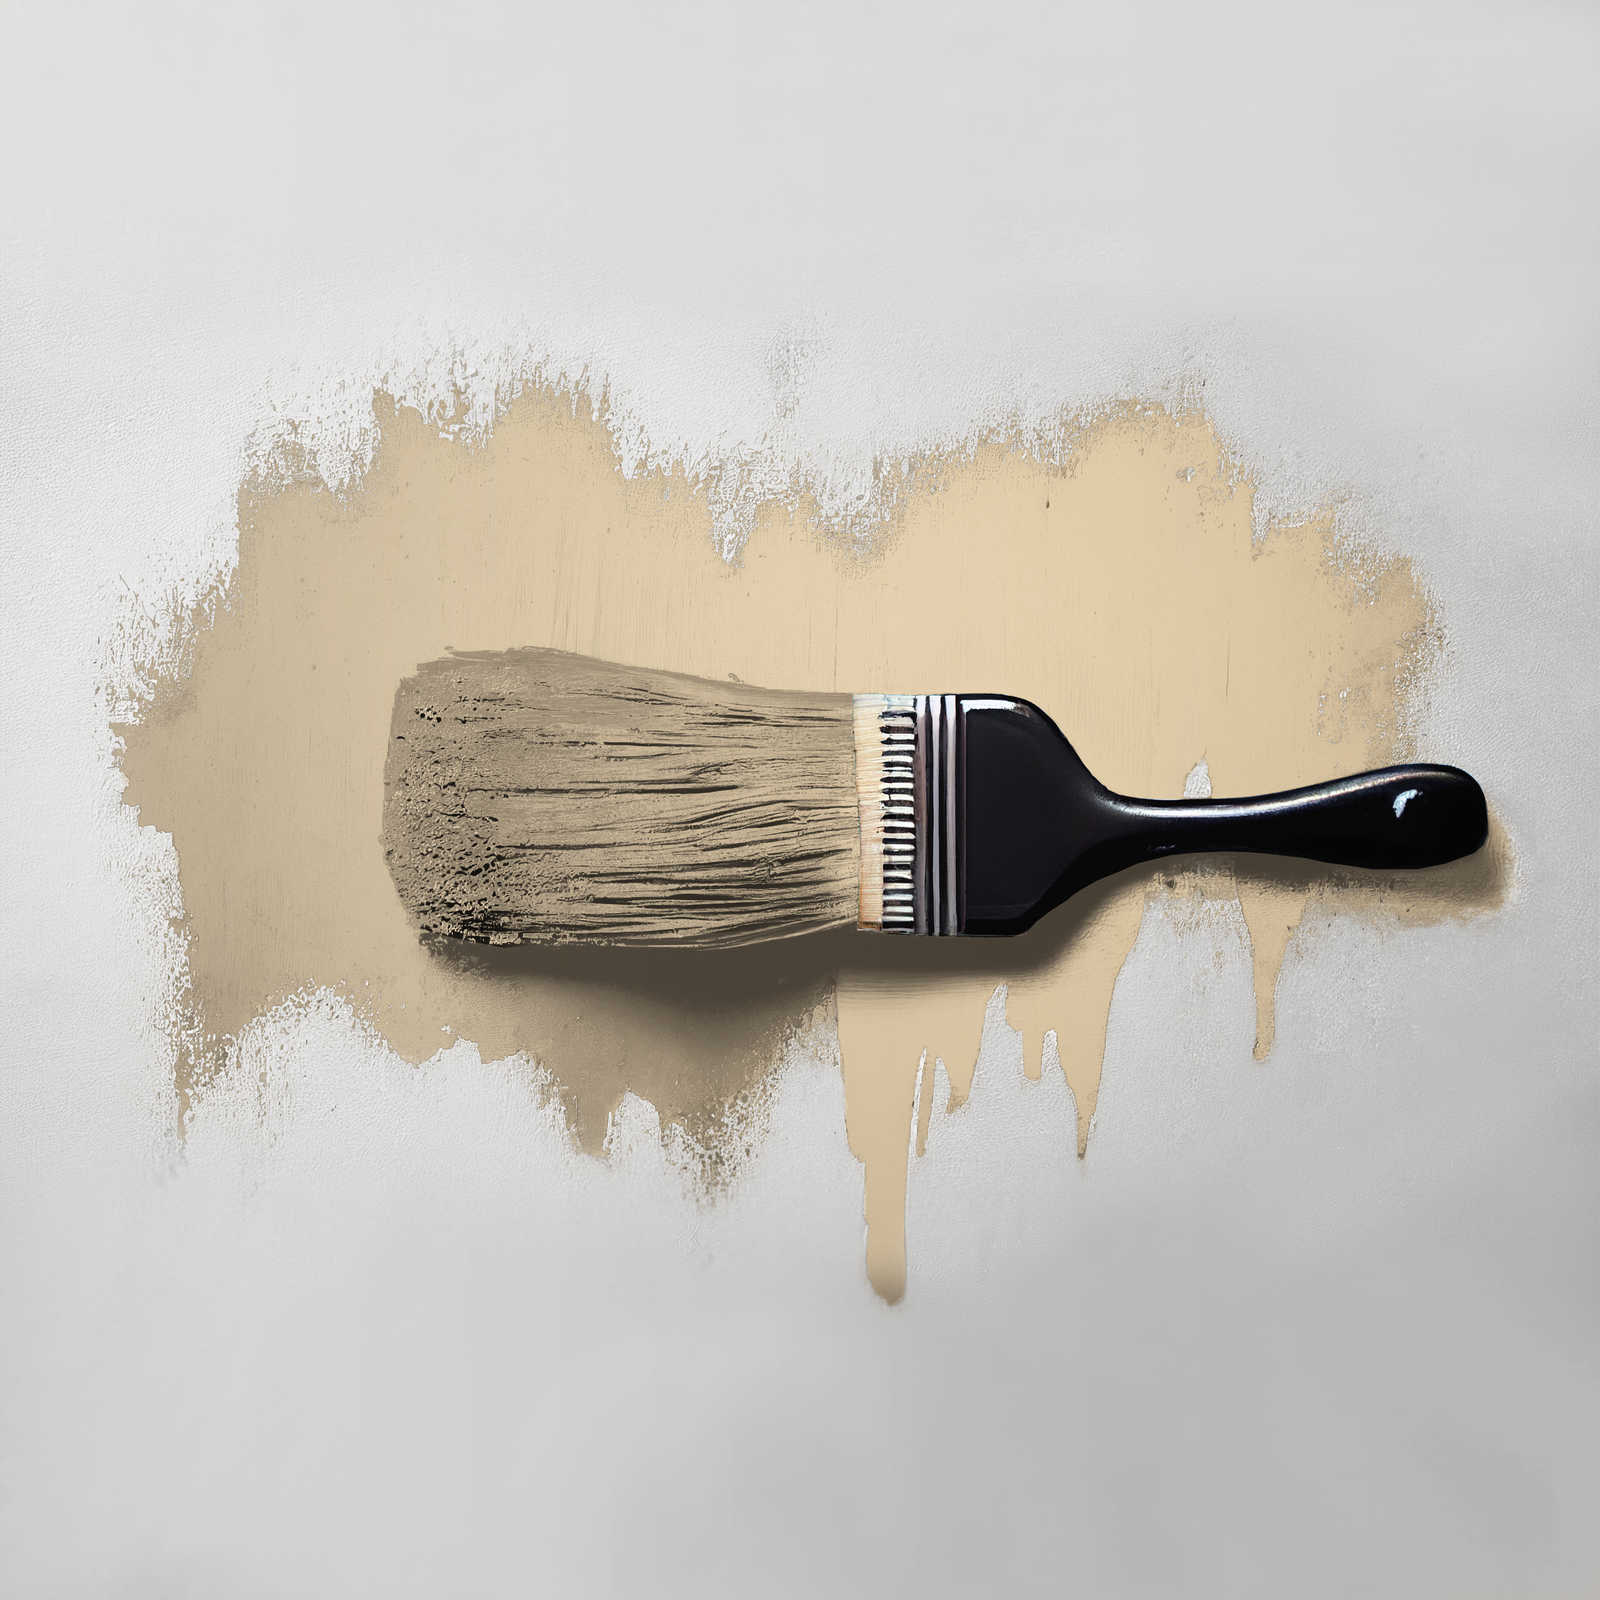             Pittura murale TCK6003 »Asthetic Artichoke« in beige casalingo – 2,5 litri
        